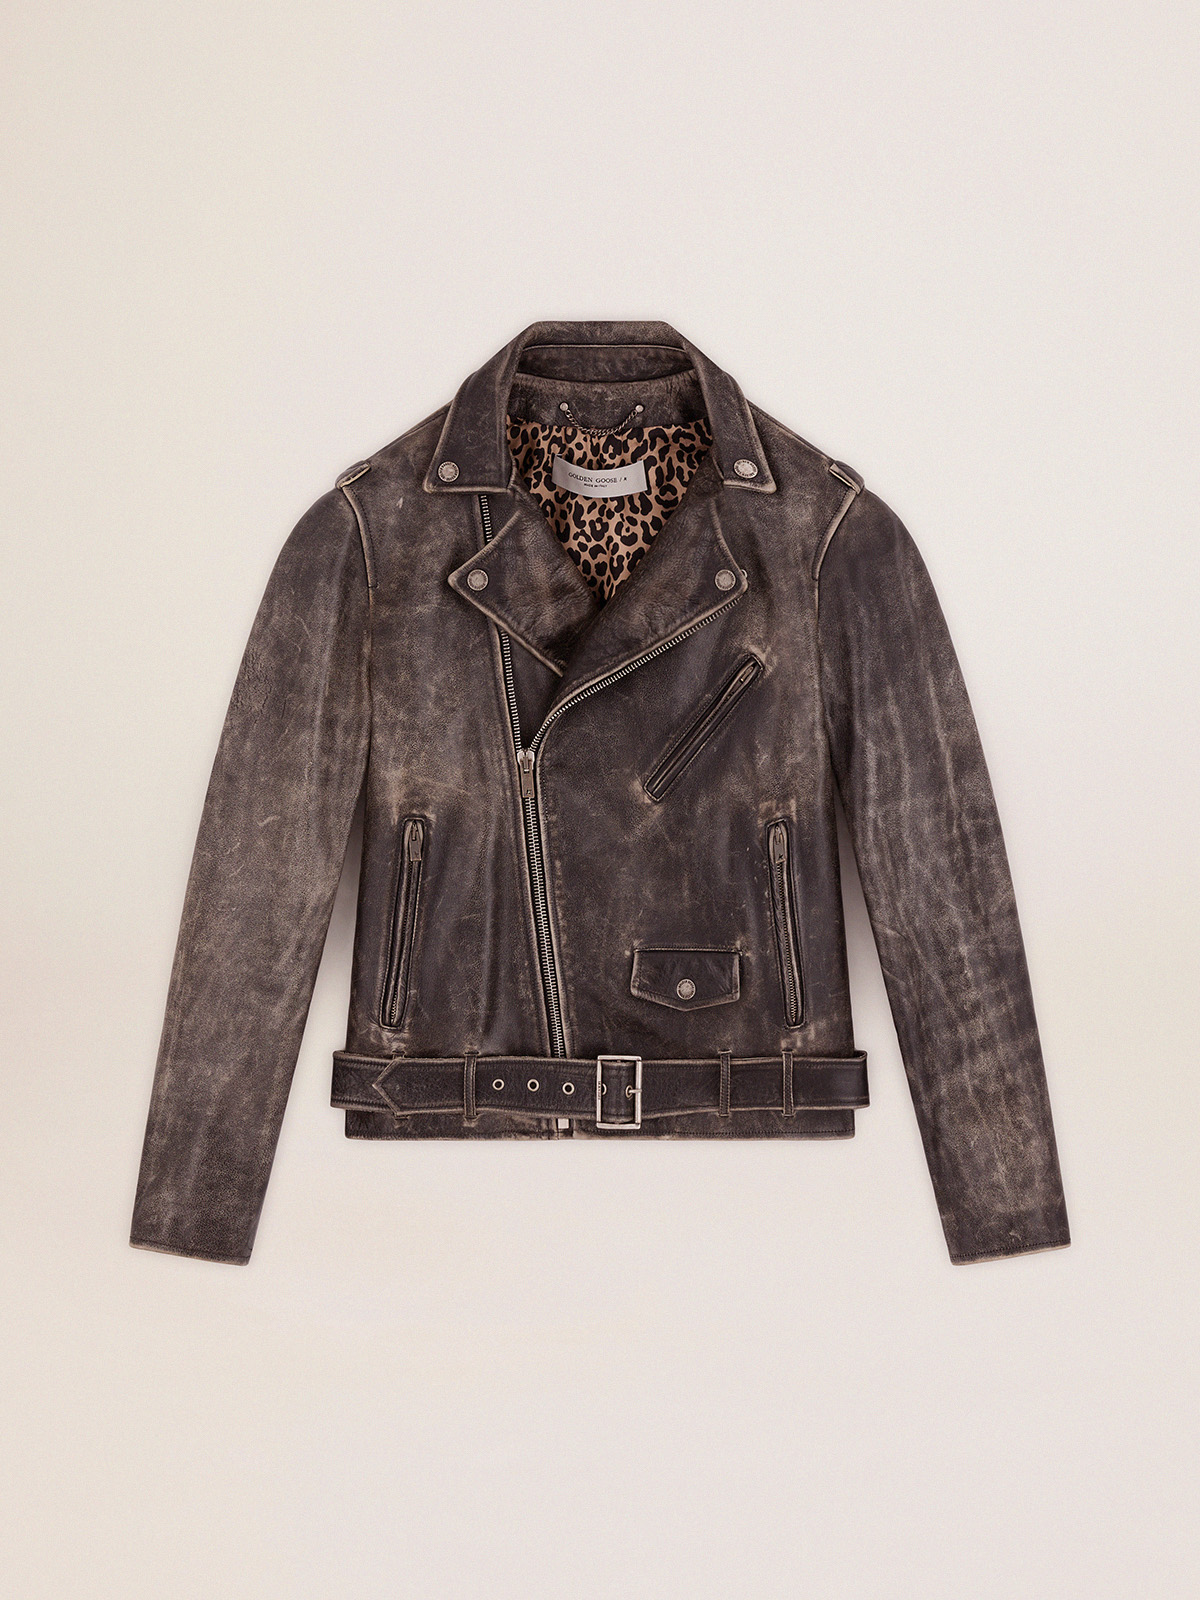 Biker Black Leather Jacket Chains Men - Jackets Creator